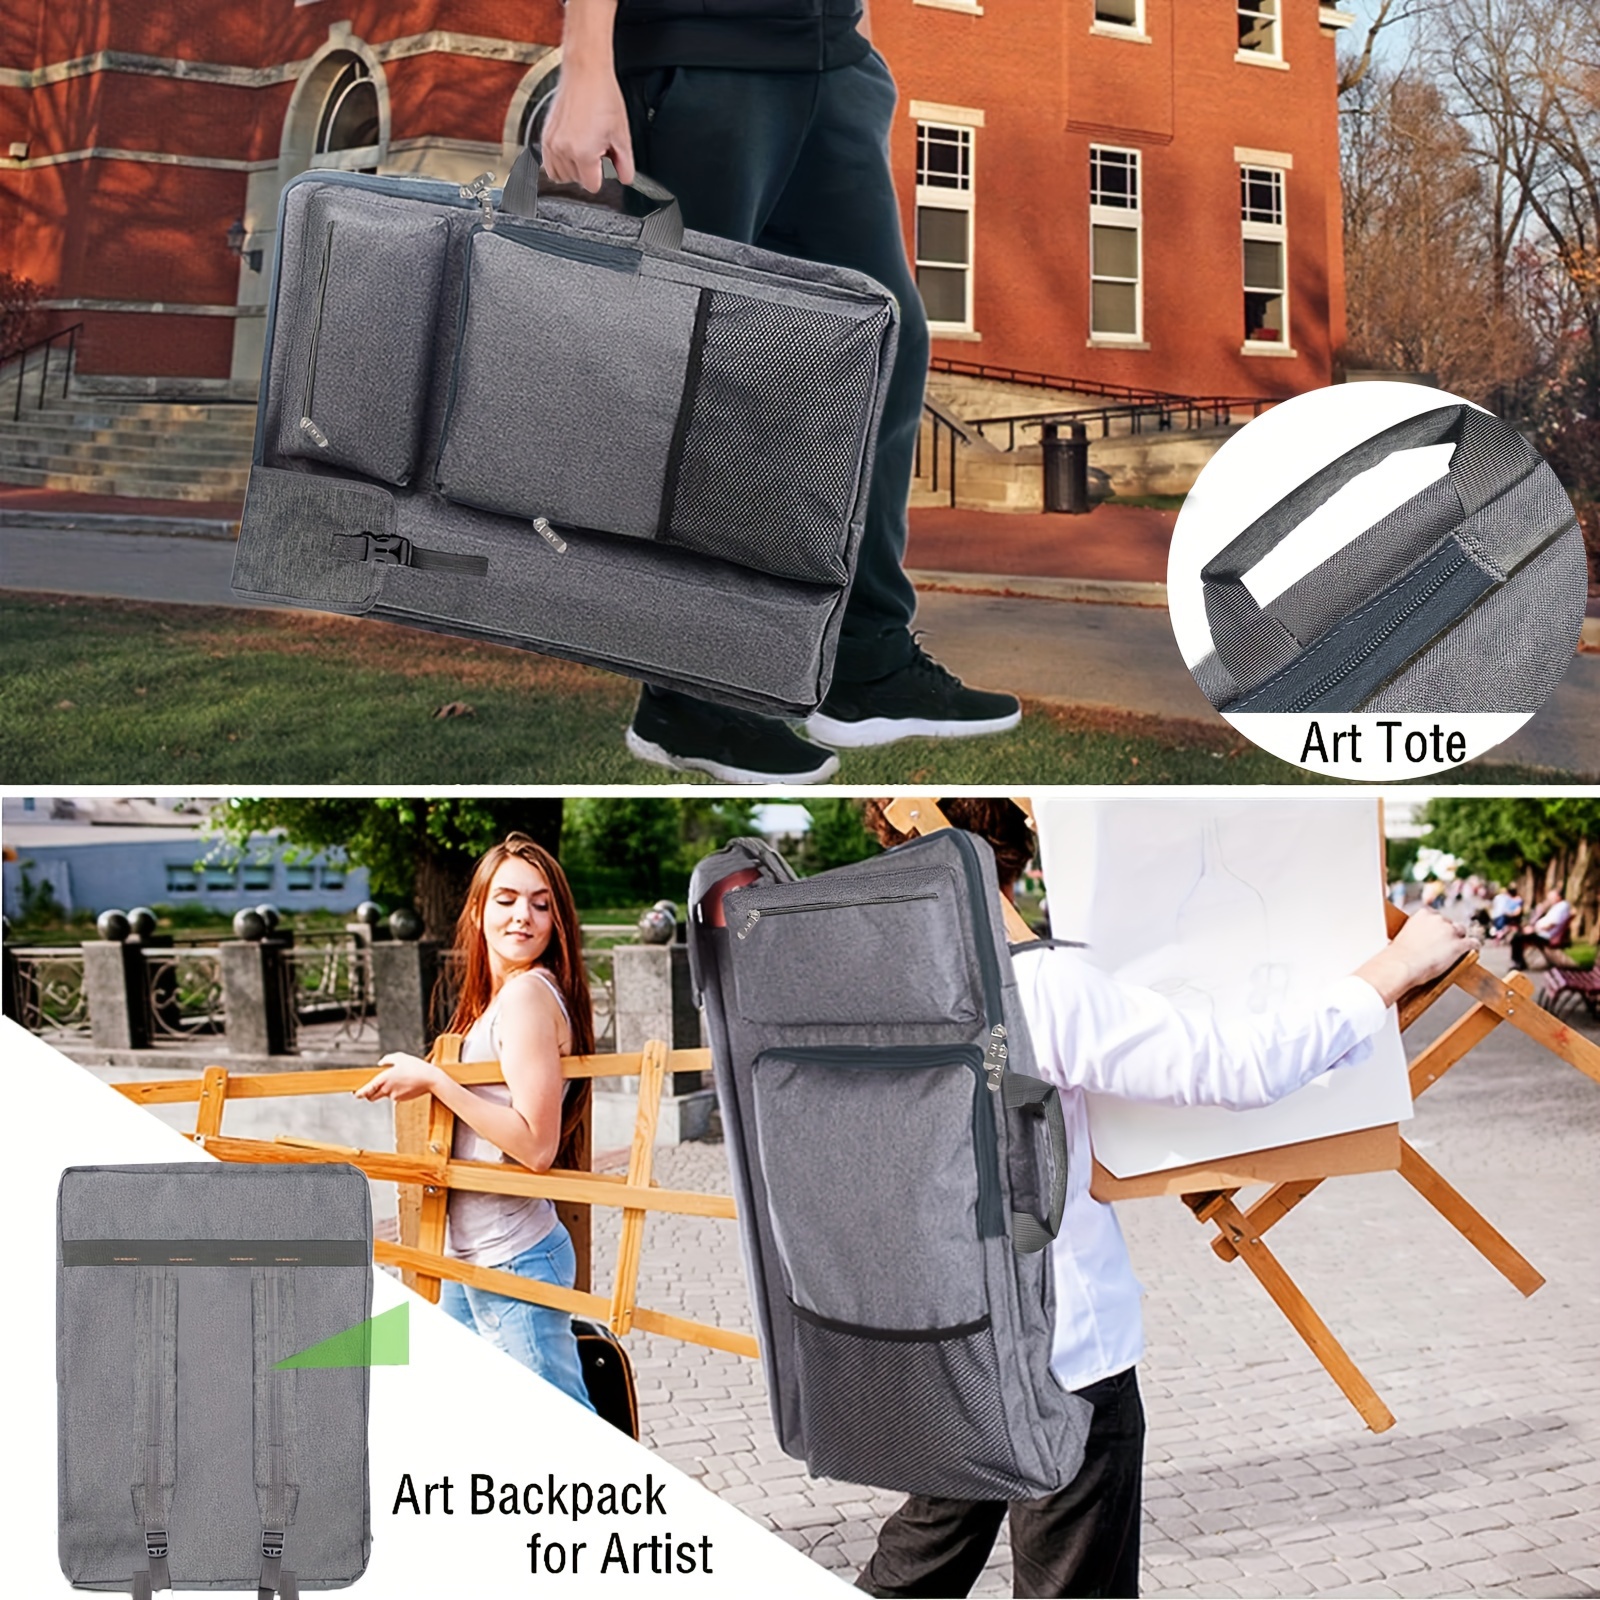 Portable Art Portfolio Bag, Posters Storage Bag With Zipper